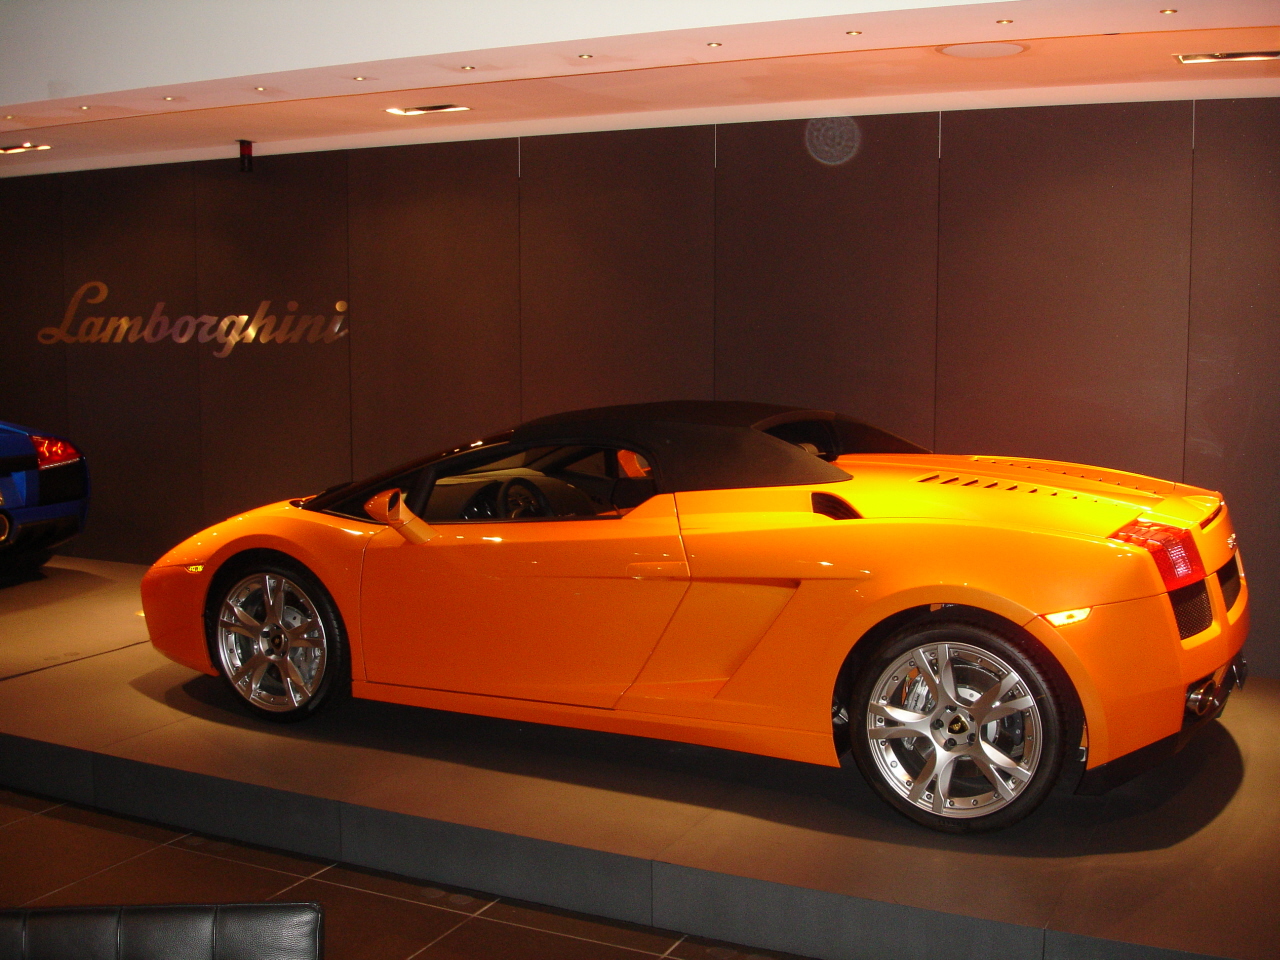 Visita al Museo Lamborghini Las Vegas/ Visit to Lamborghini Museum LasVegas-Lamborghini06.JPG